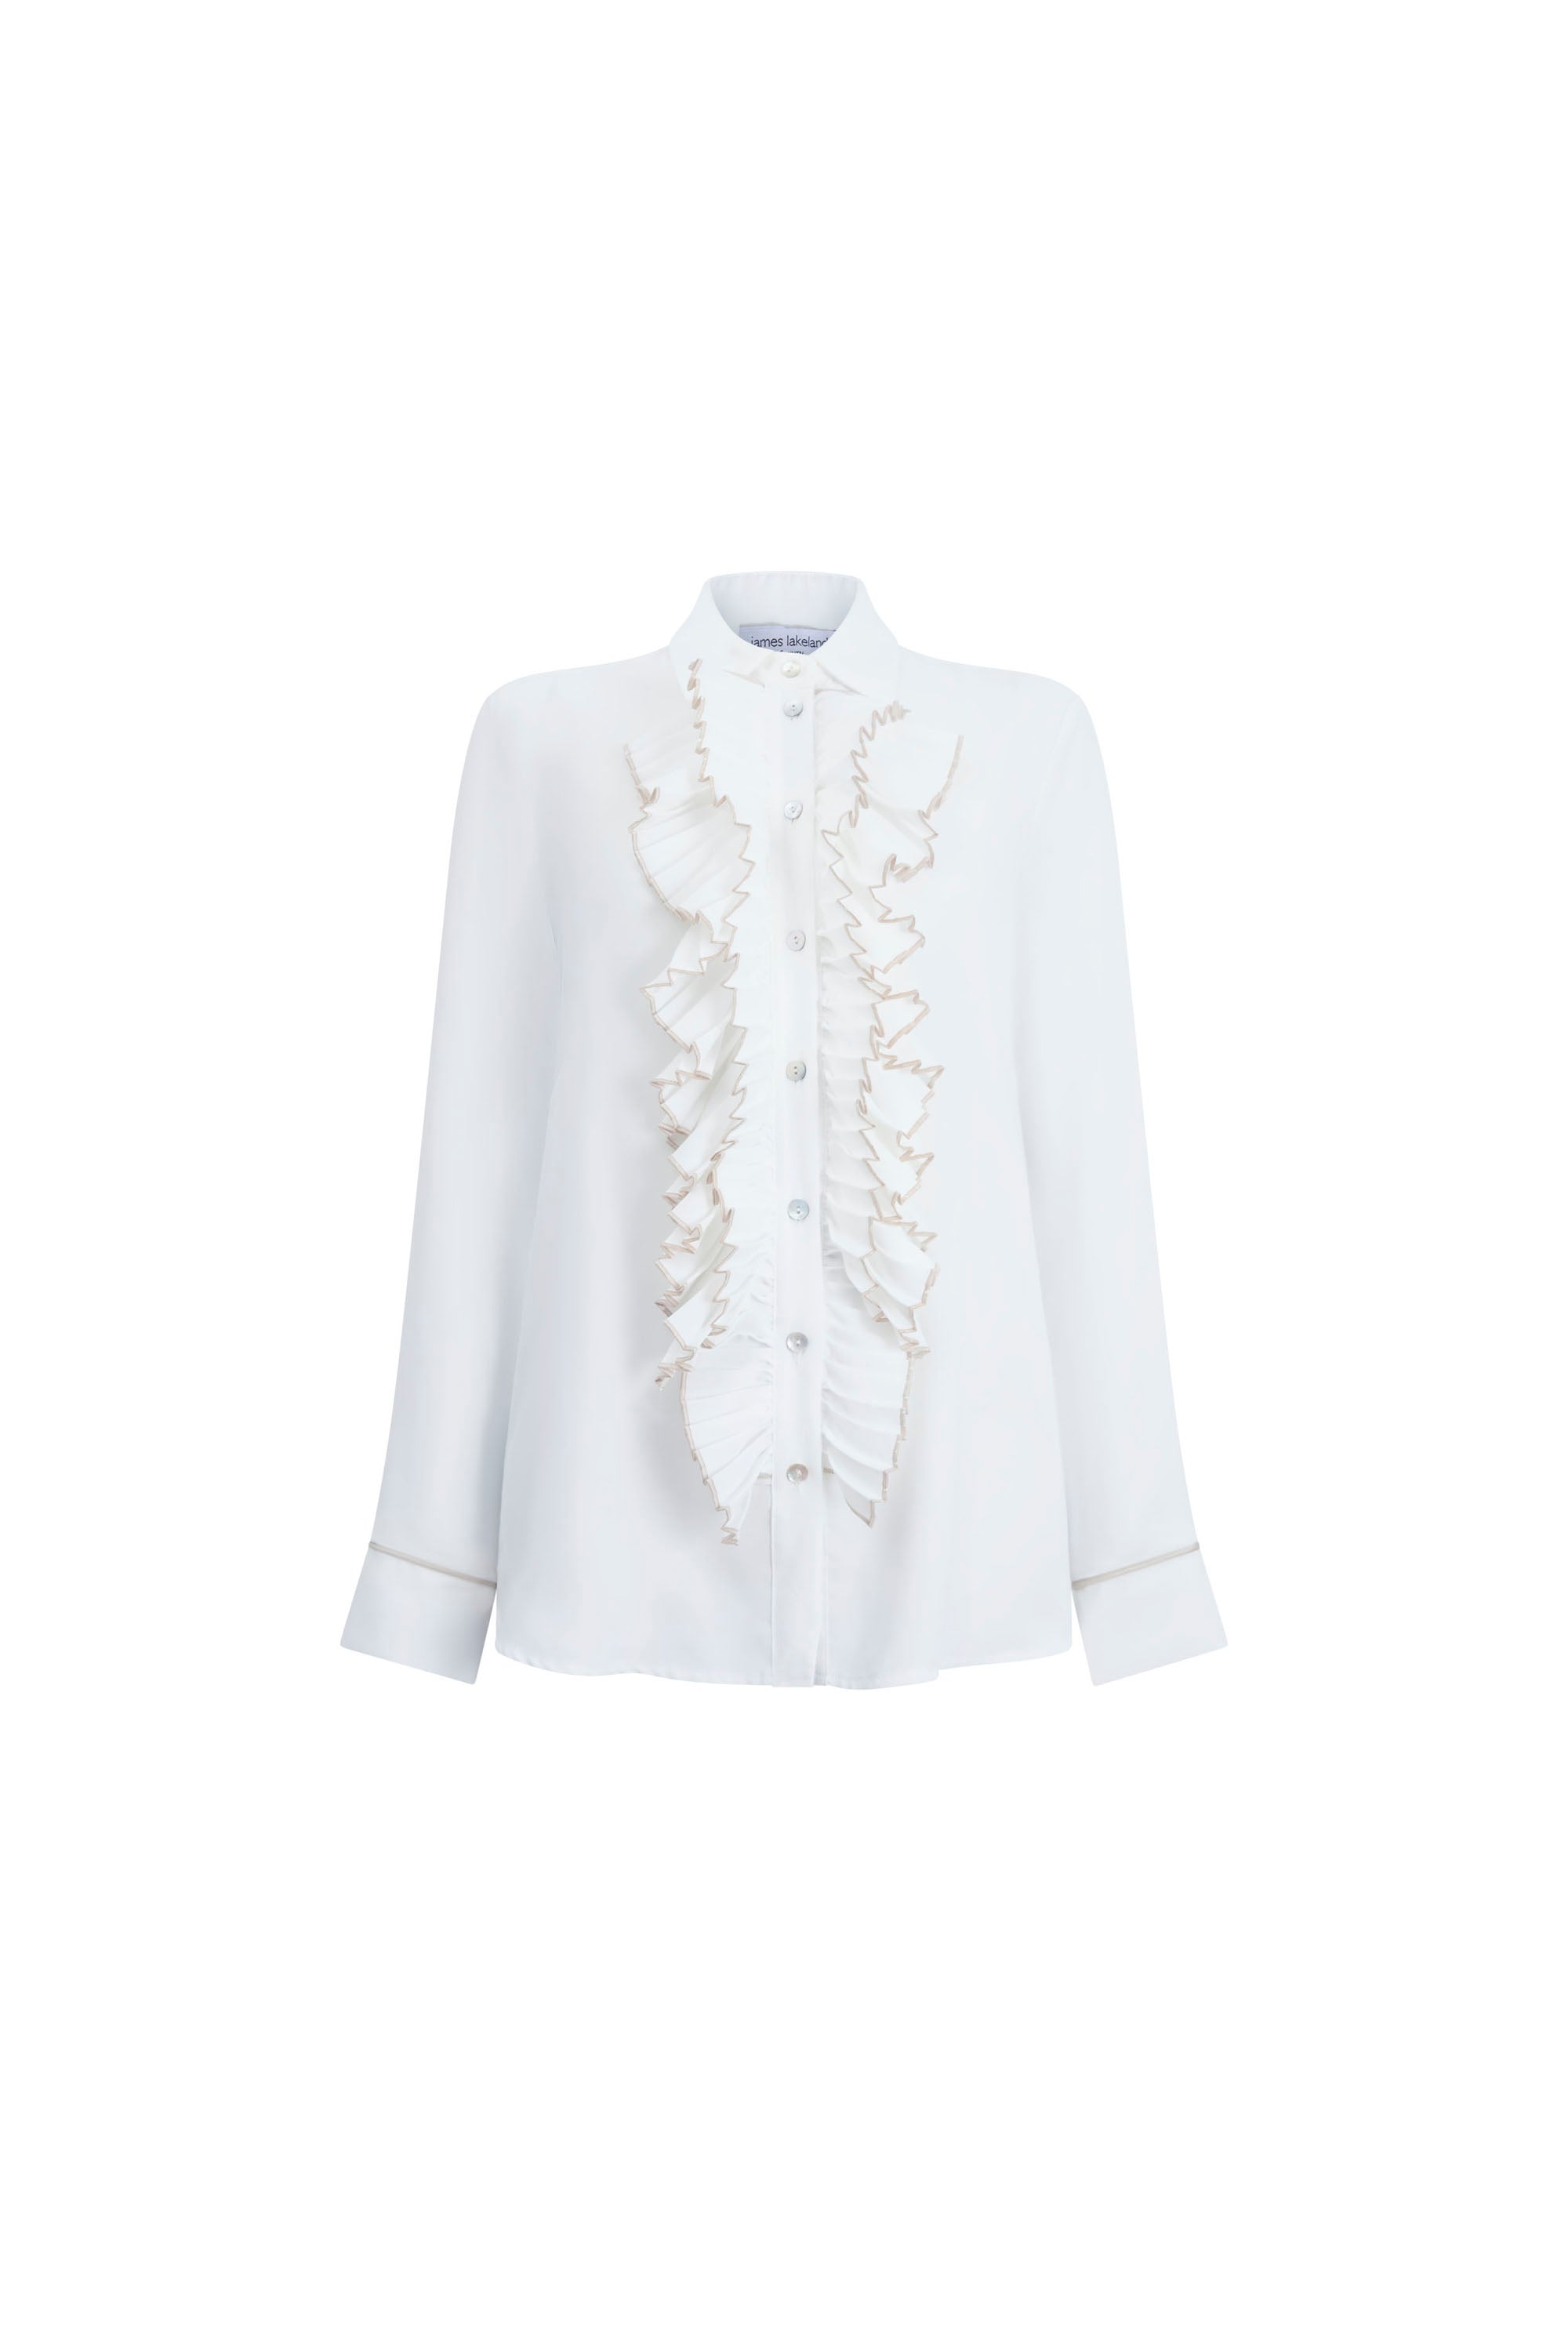 James Lakeland Women's Front Ruffle Button Up Shirt White